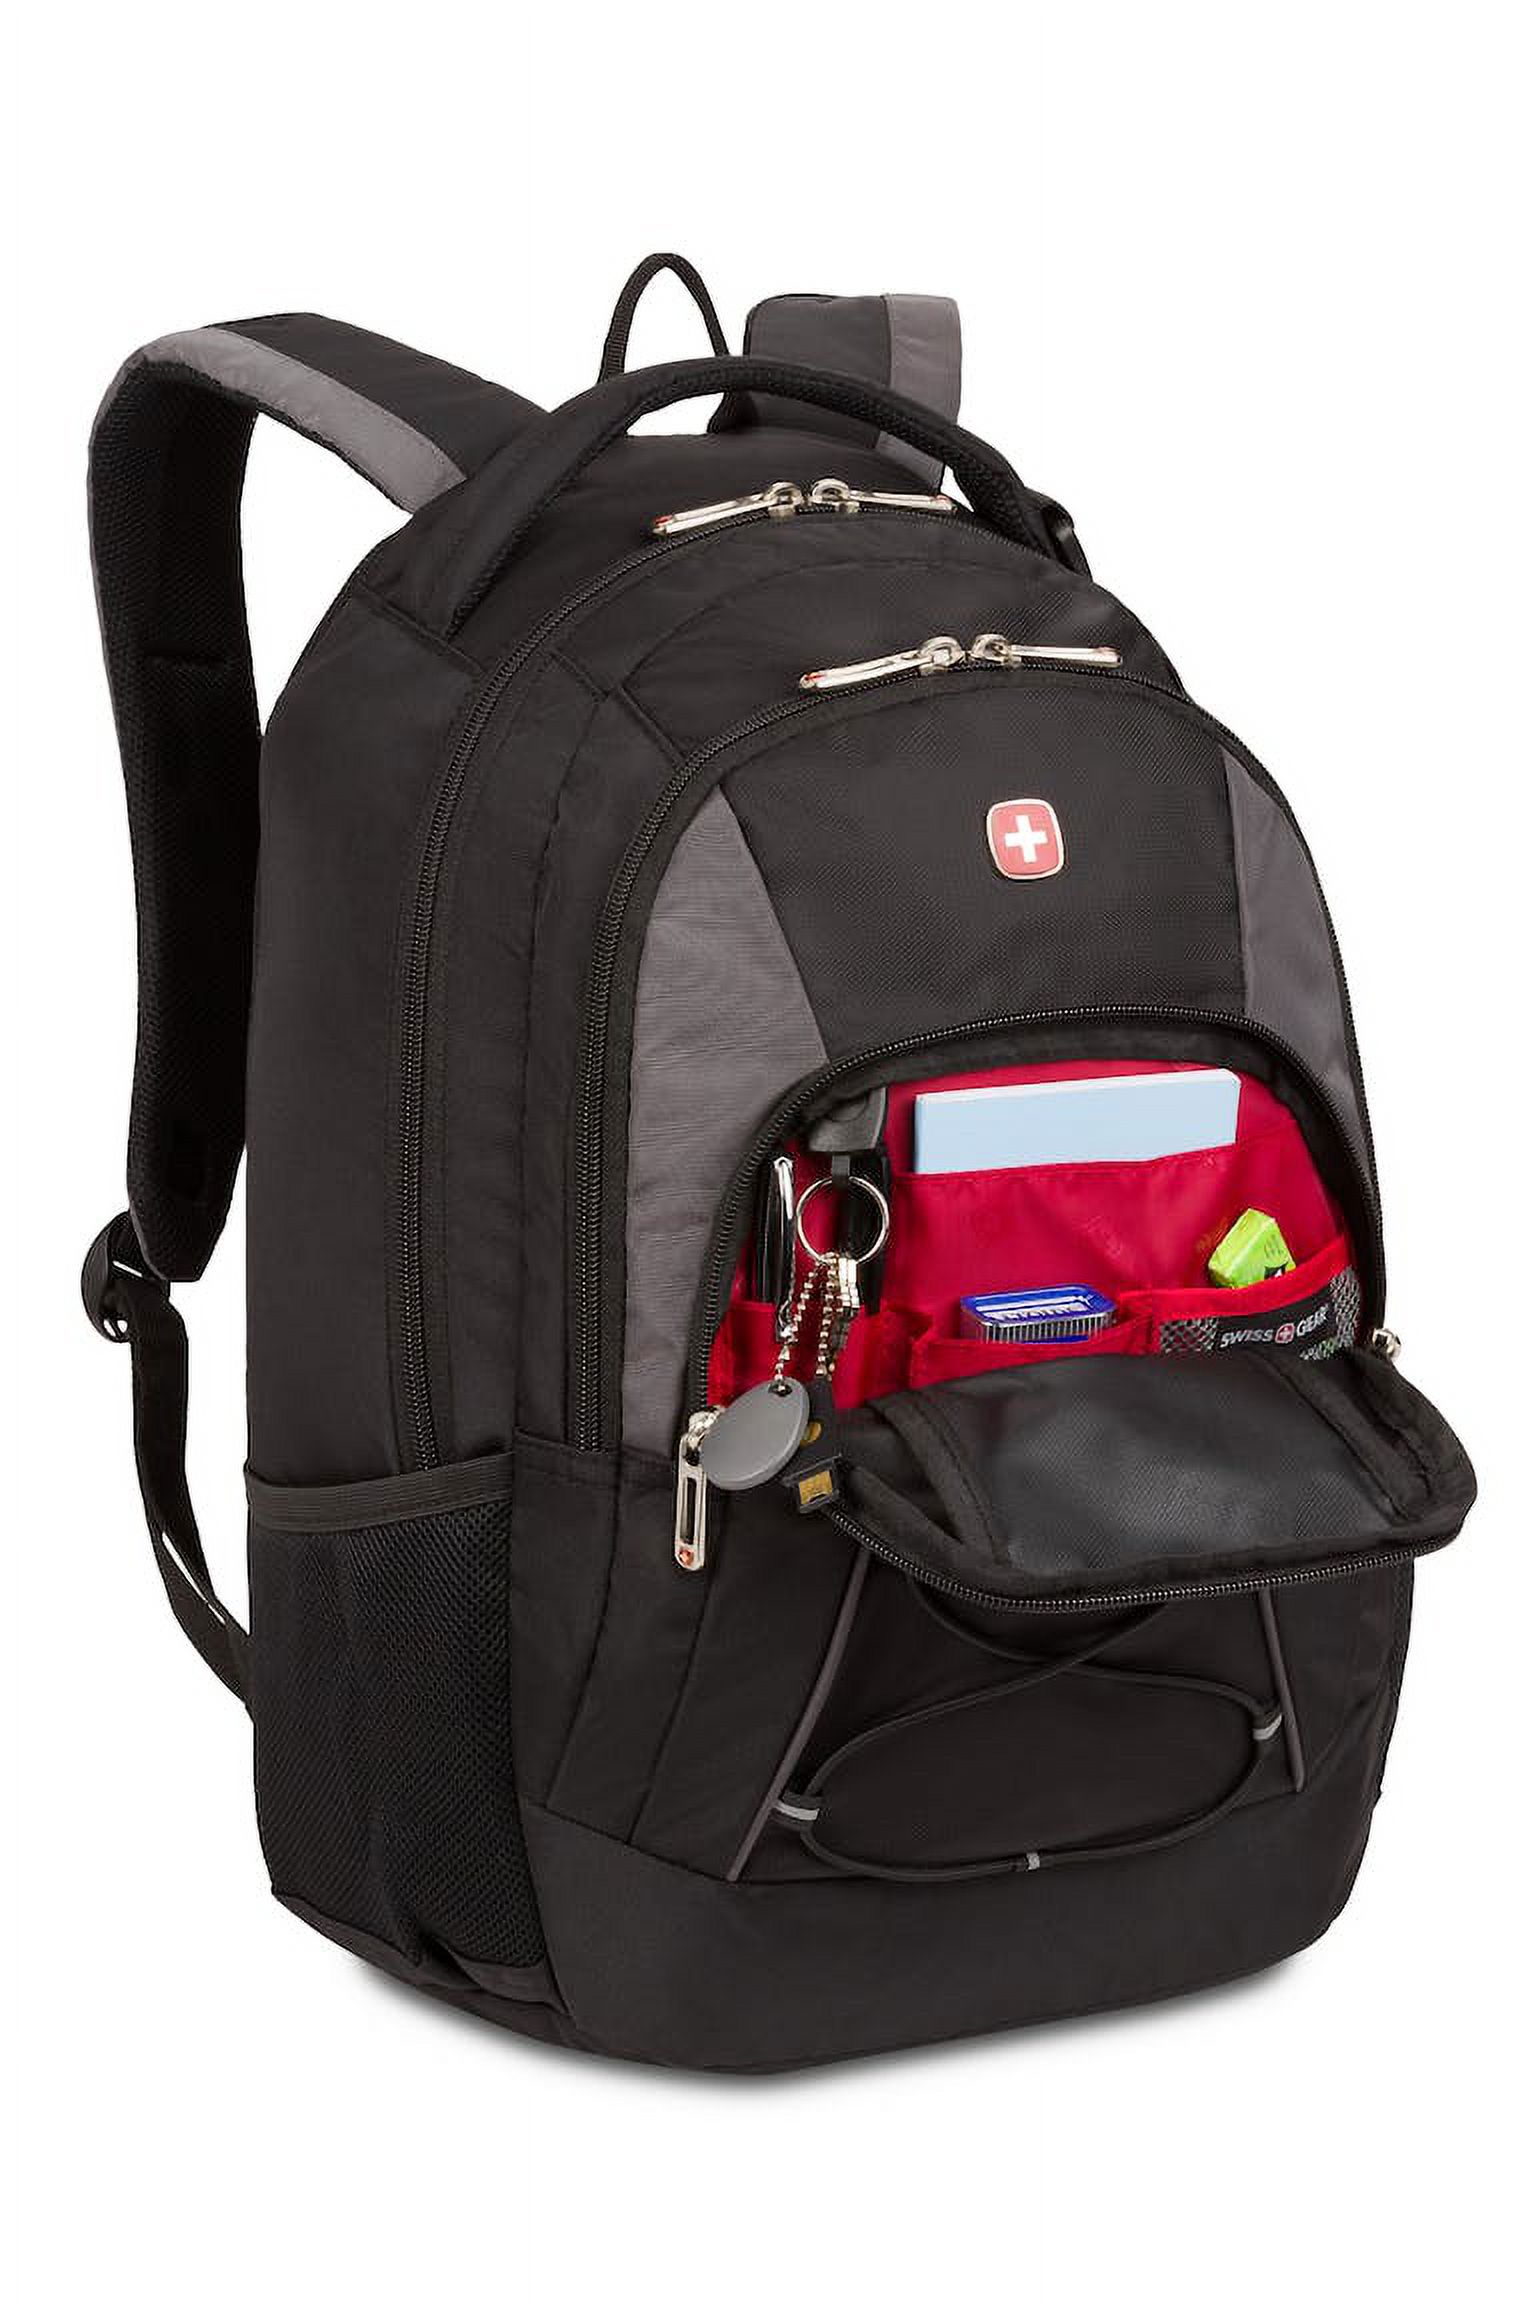 Swissgear 1186 backpack - image 3 of 4